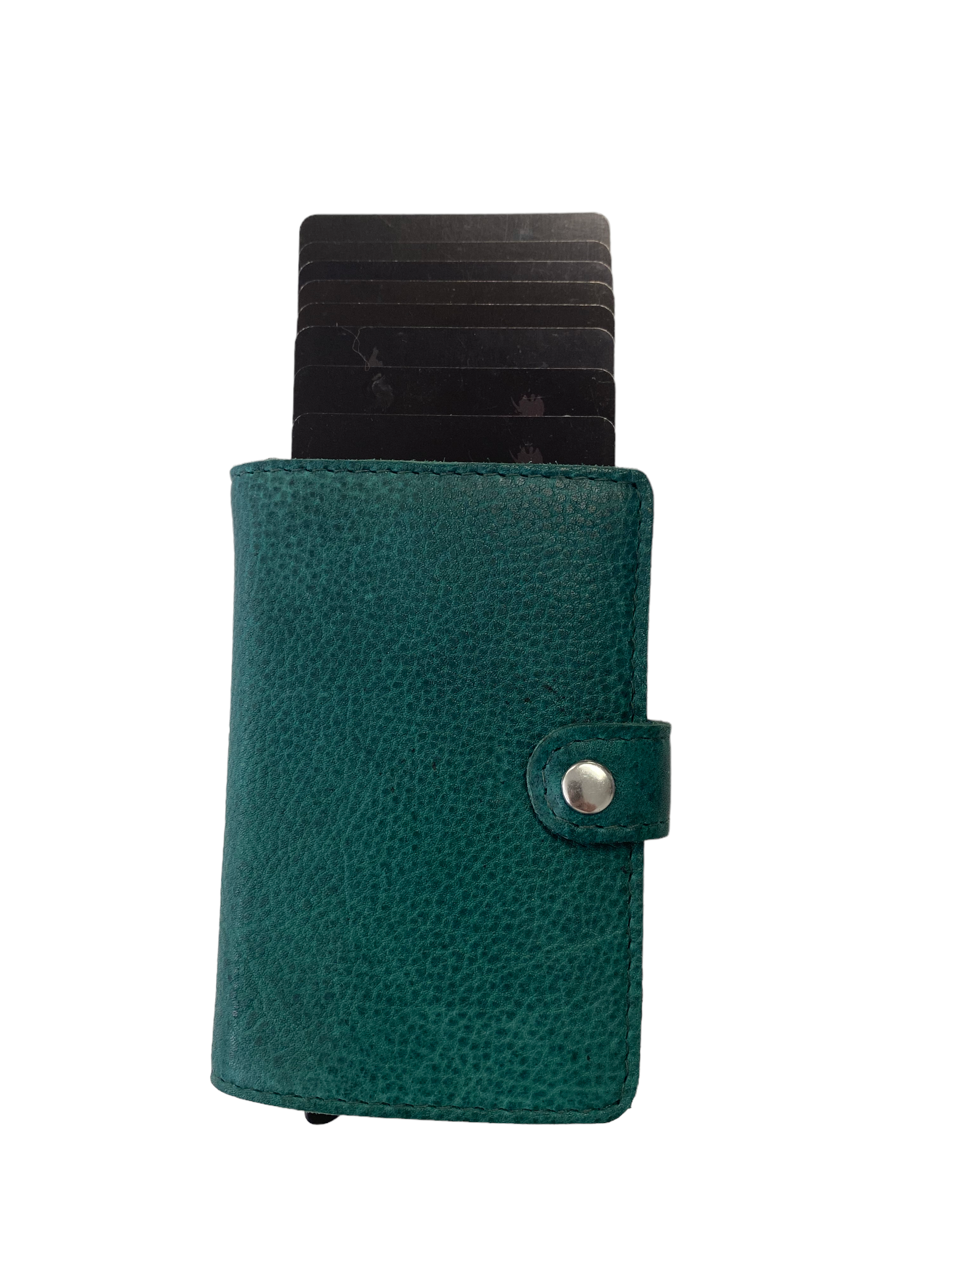 Oran - DL-02 Leather Spring load 8 card wallet - Green-1